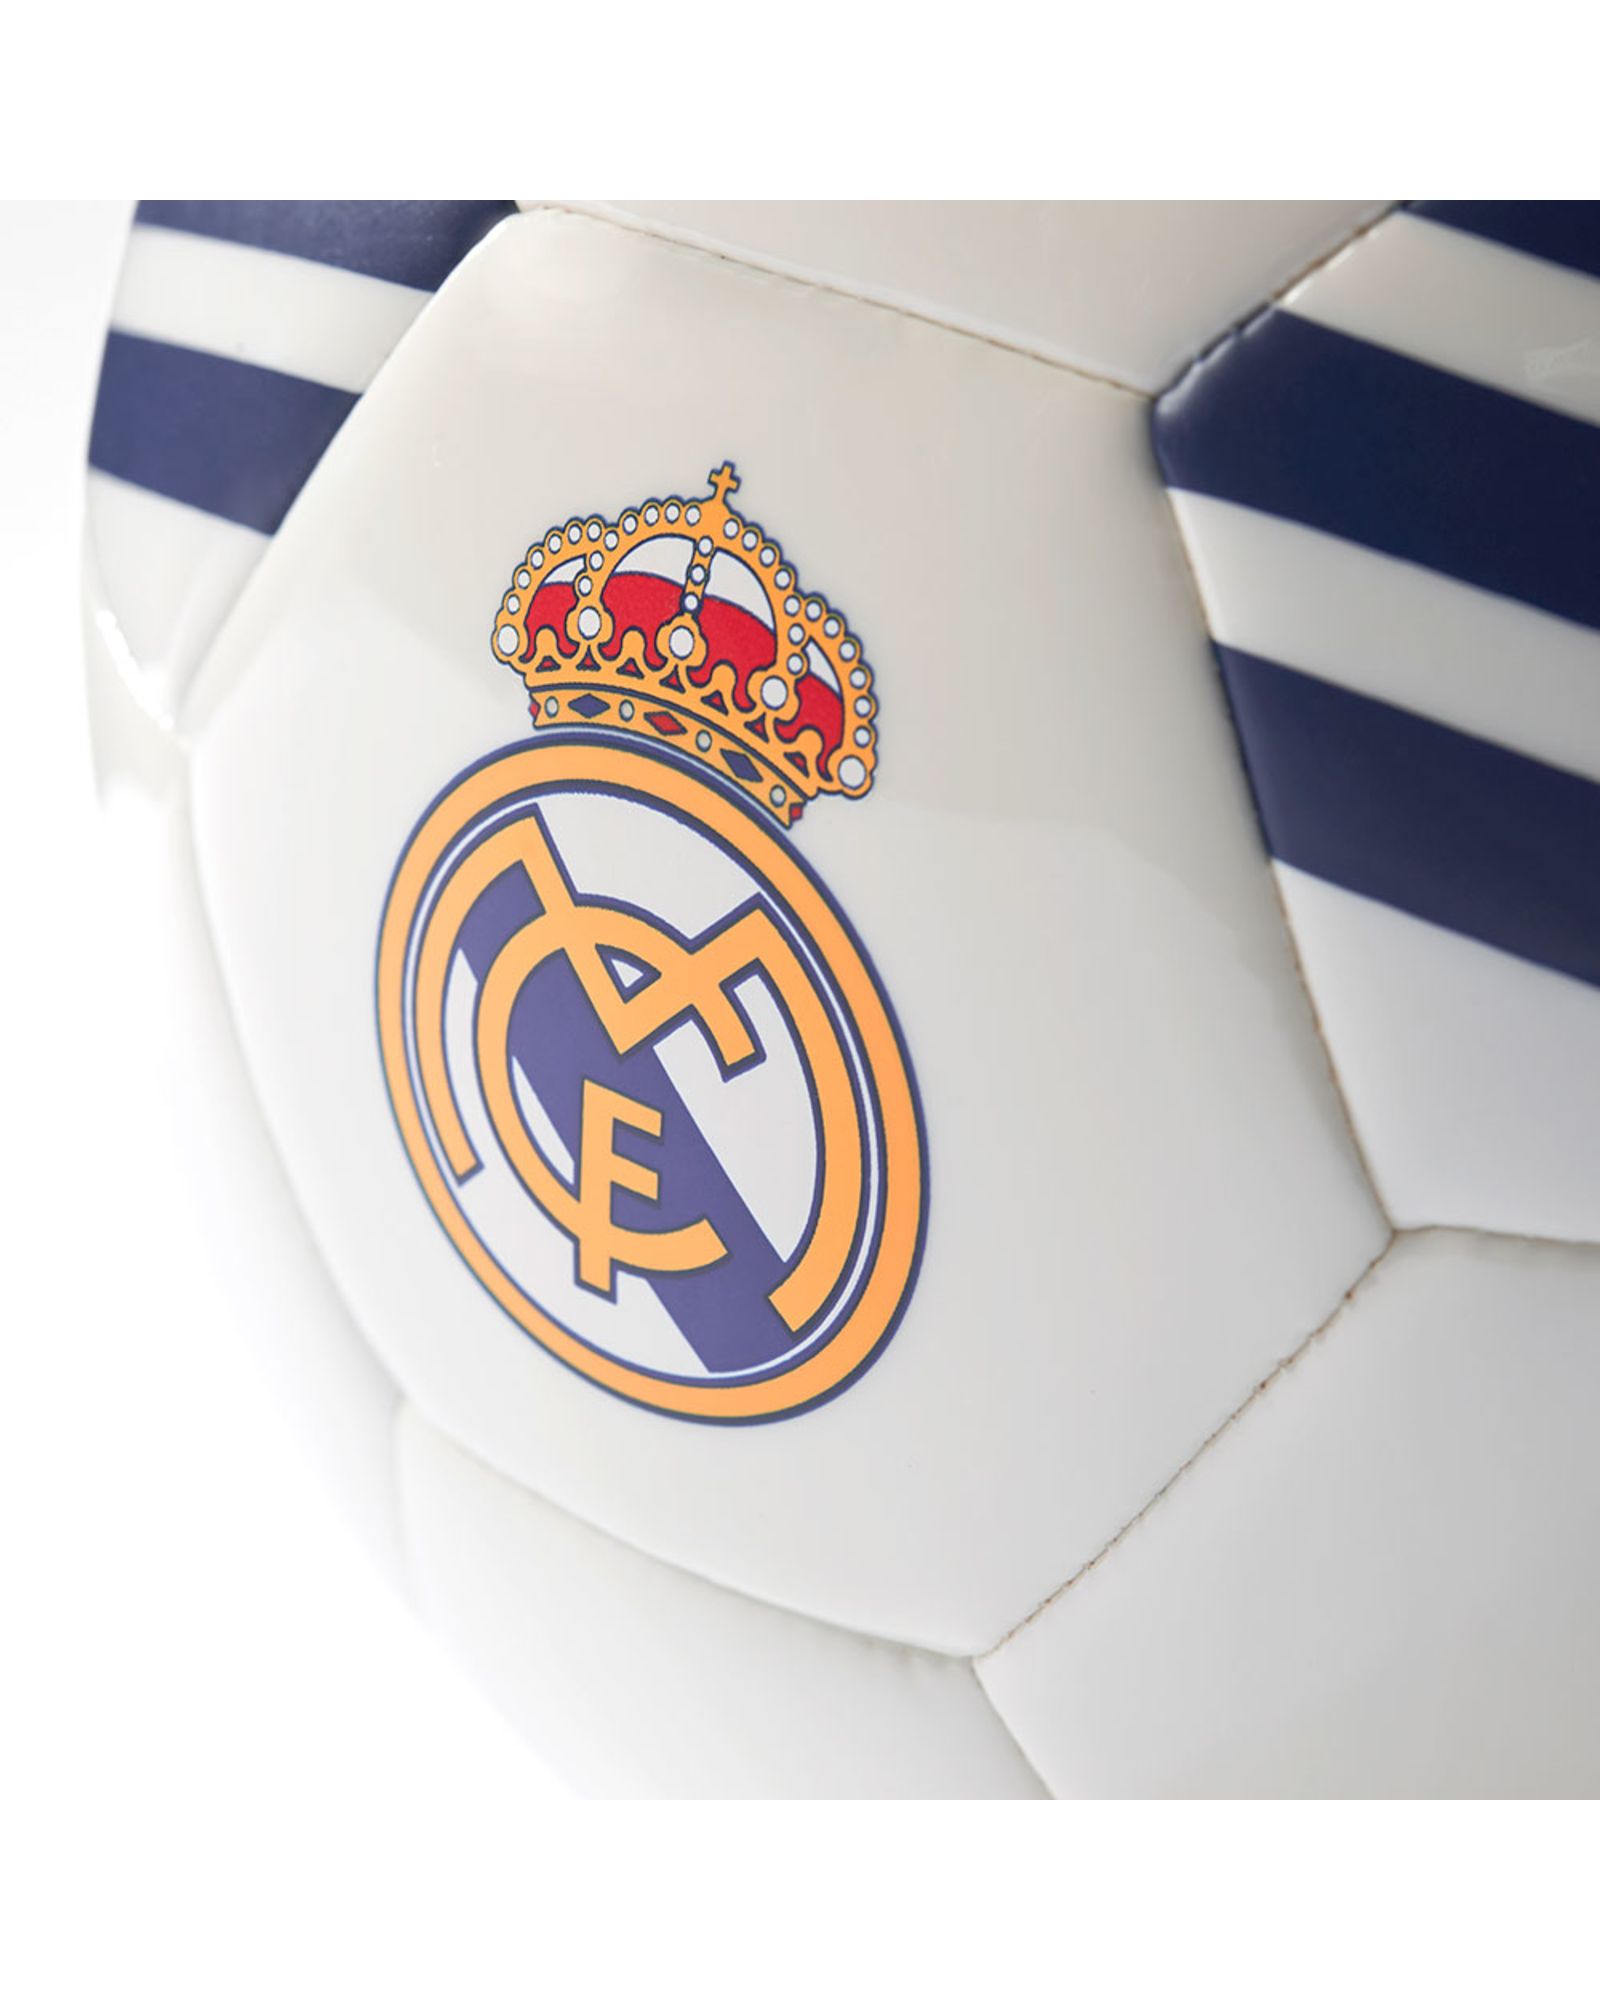 Real Madrid Balón de fútbol - Blanco/Azul - Real Madrid CF